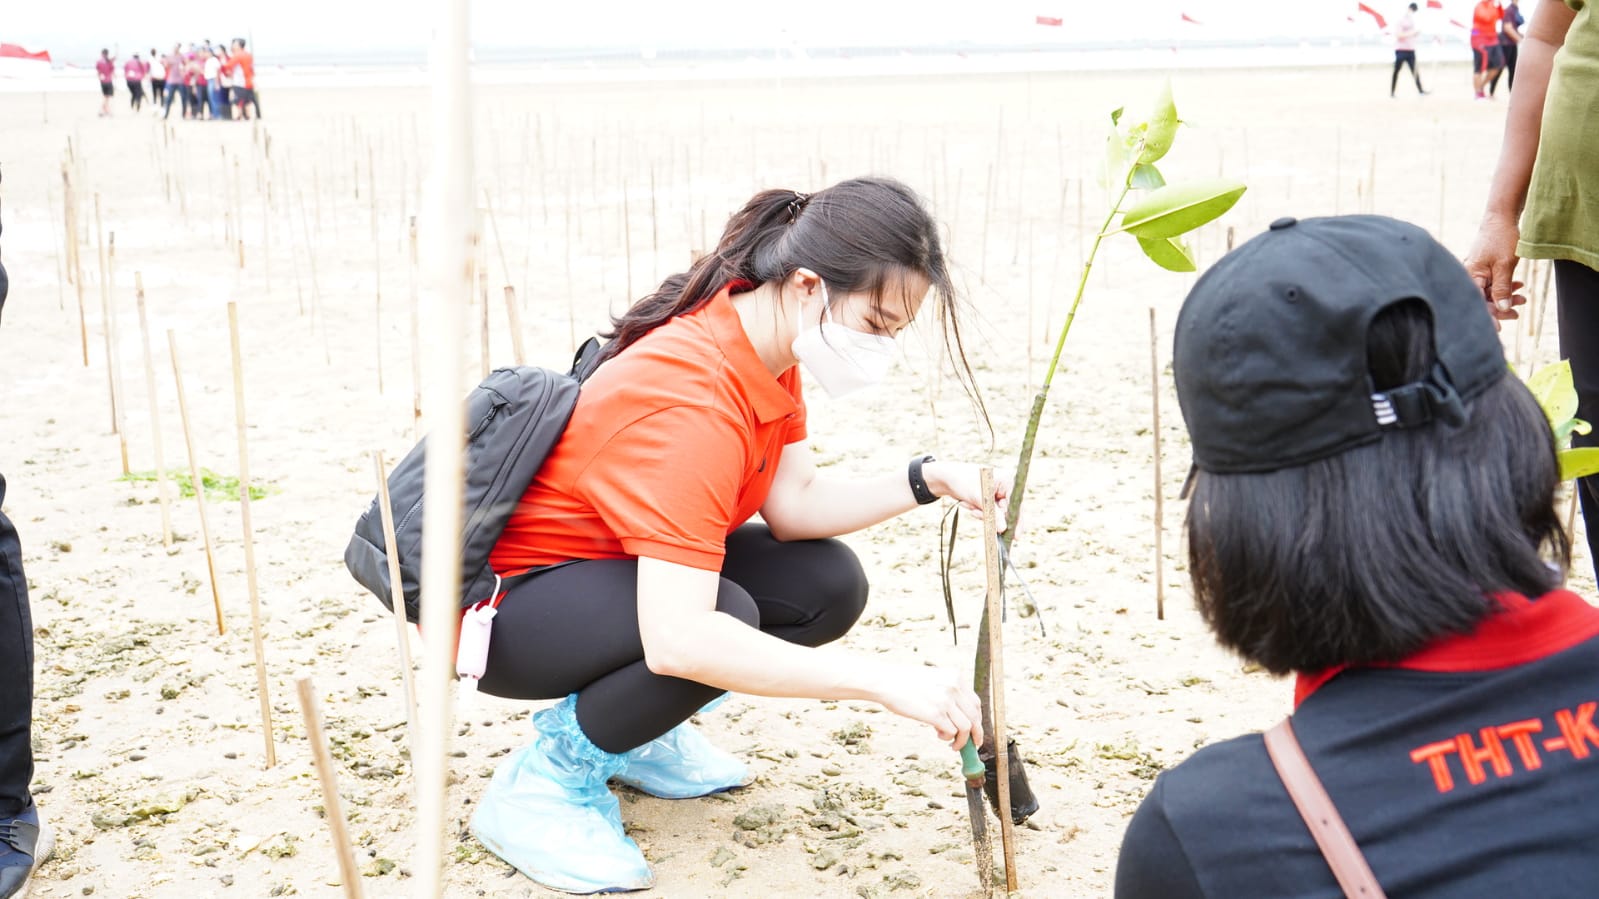 Orthopedic and Traumatology Study Program Commemorates Indonesian Independence Day with Mangrove Planting